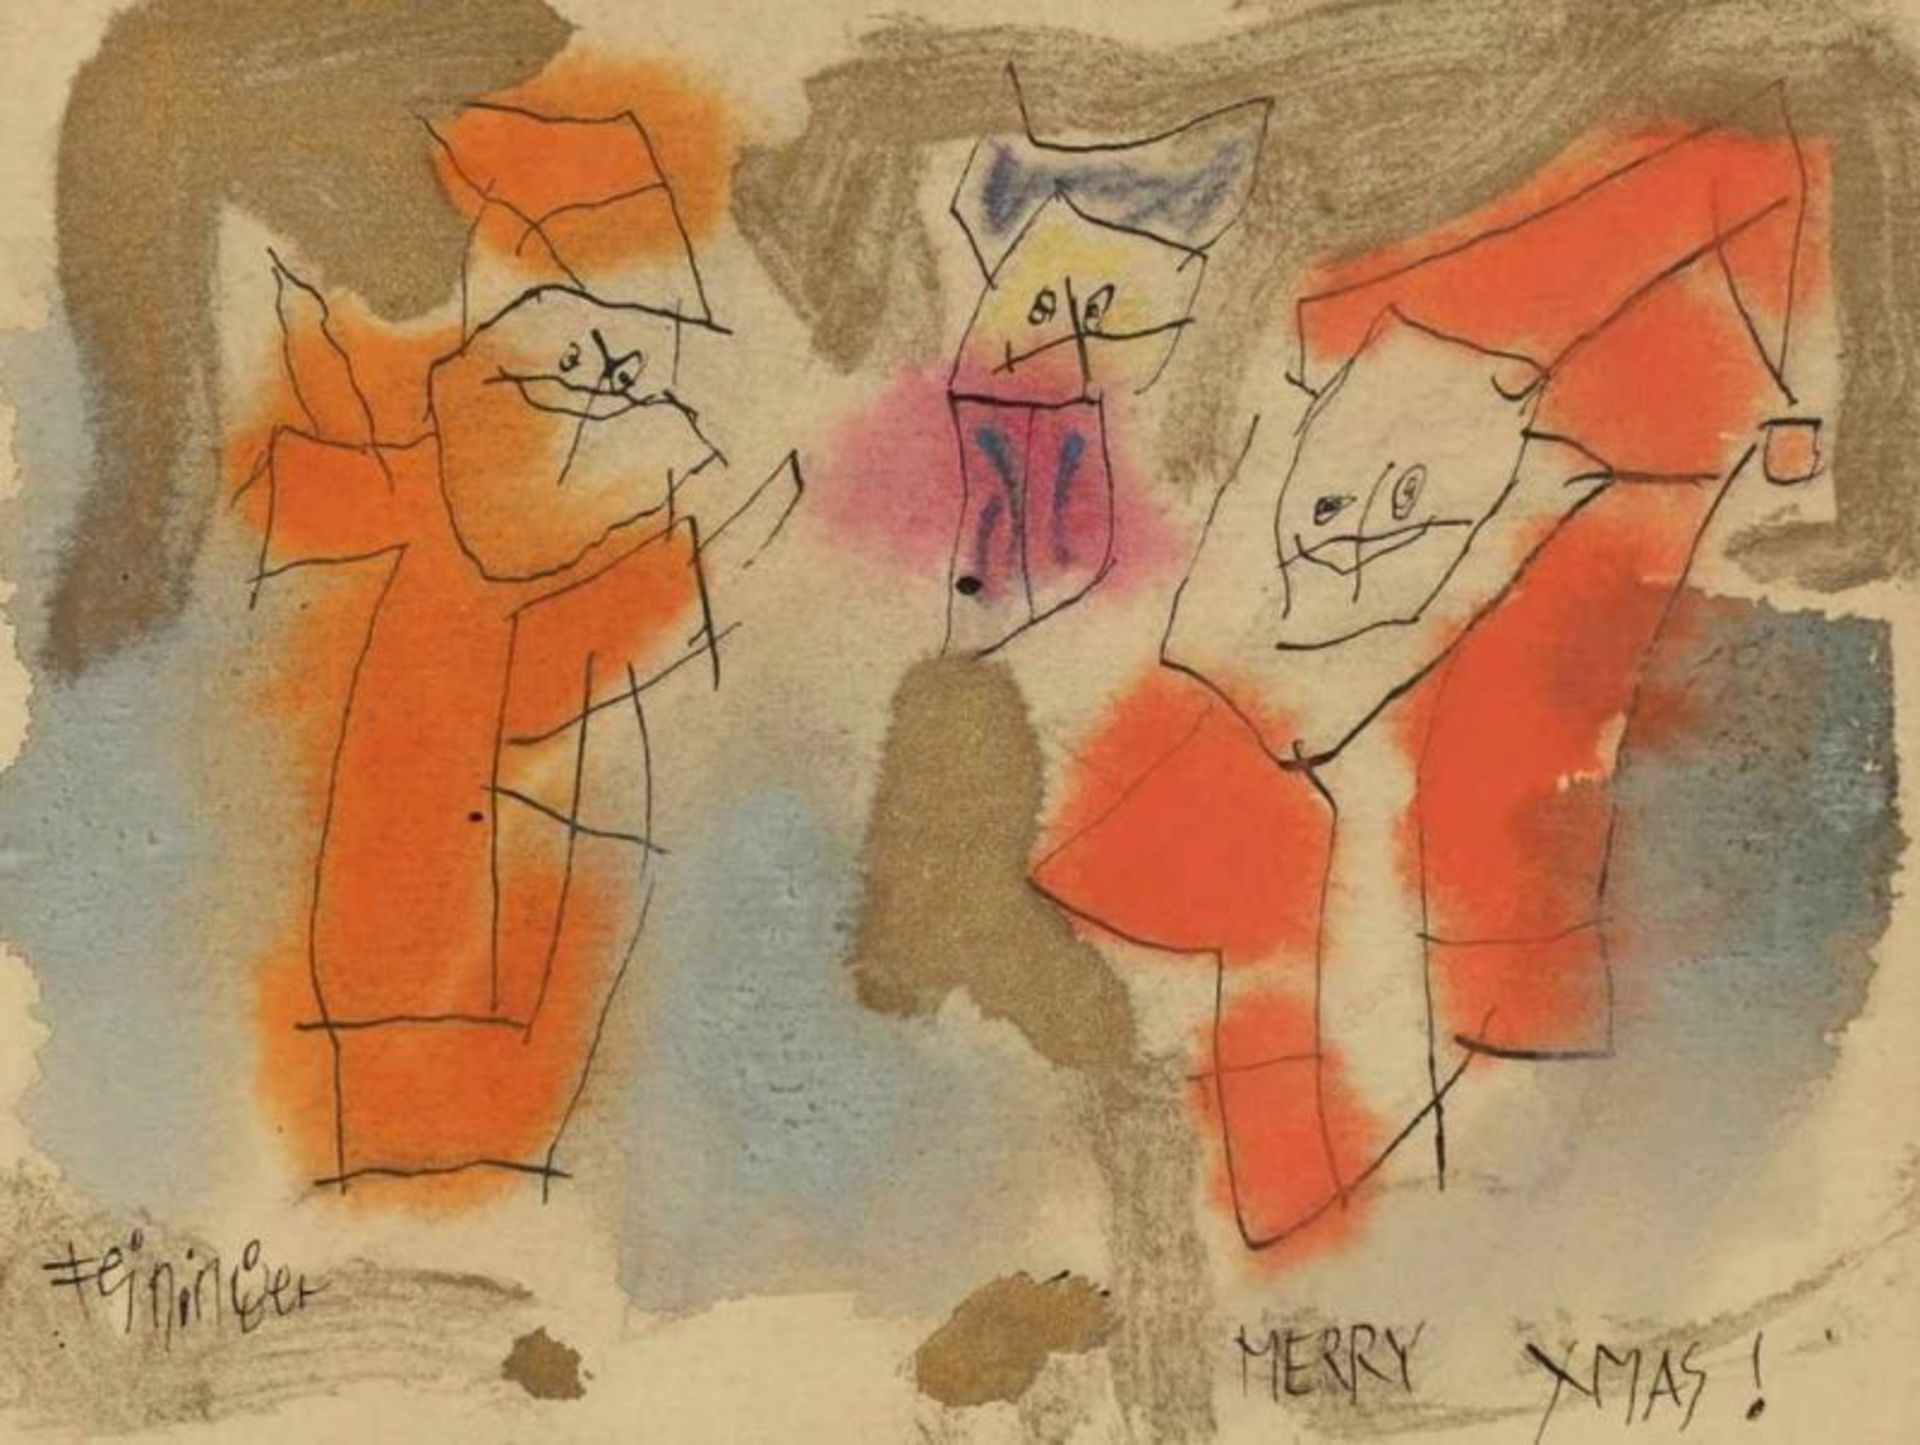 Lyonel Feininger 1871 New York - 1956 New York - "Ghosties (MERRY XMAS!)" - Tusche, Aquarell und - Image 2 of 2